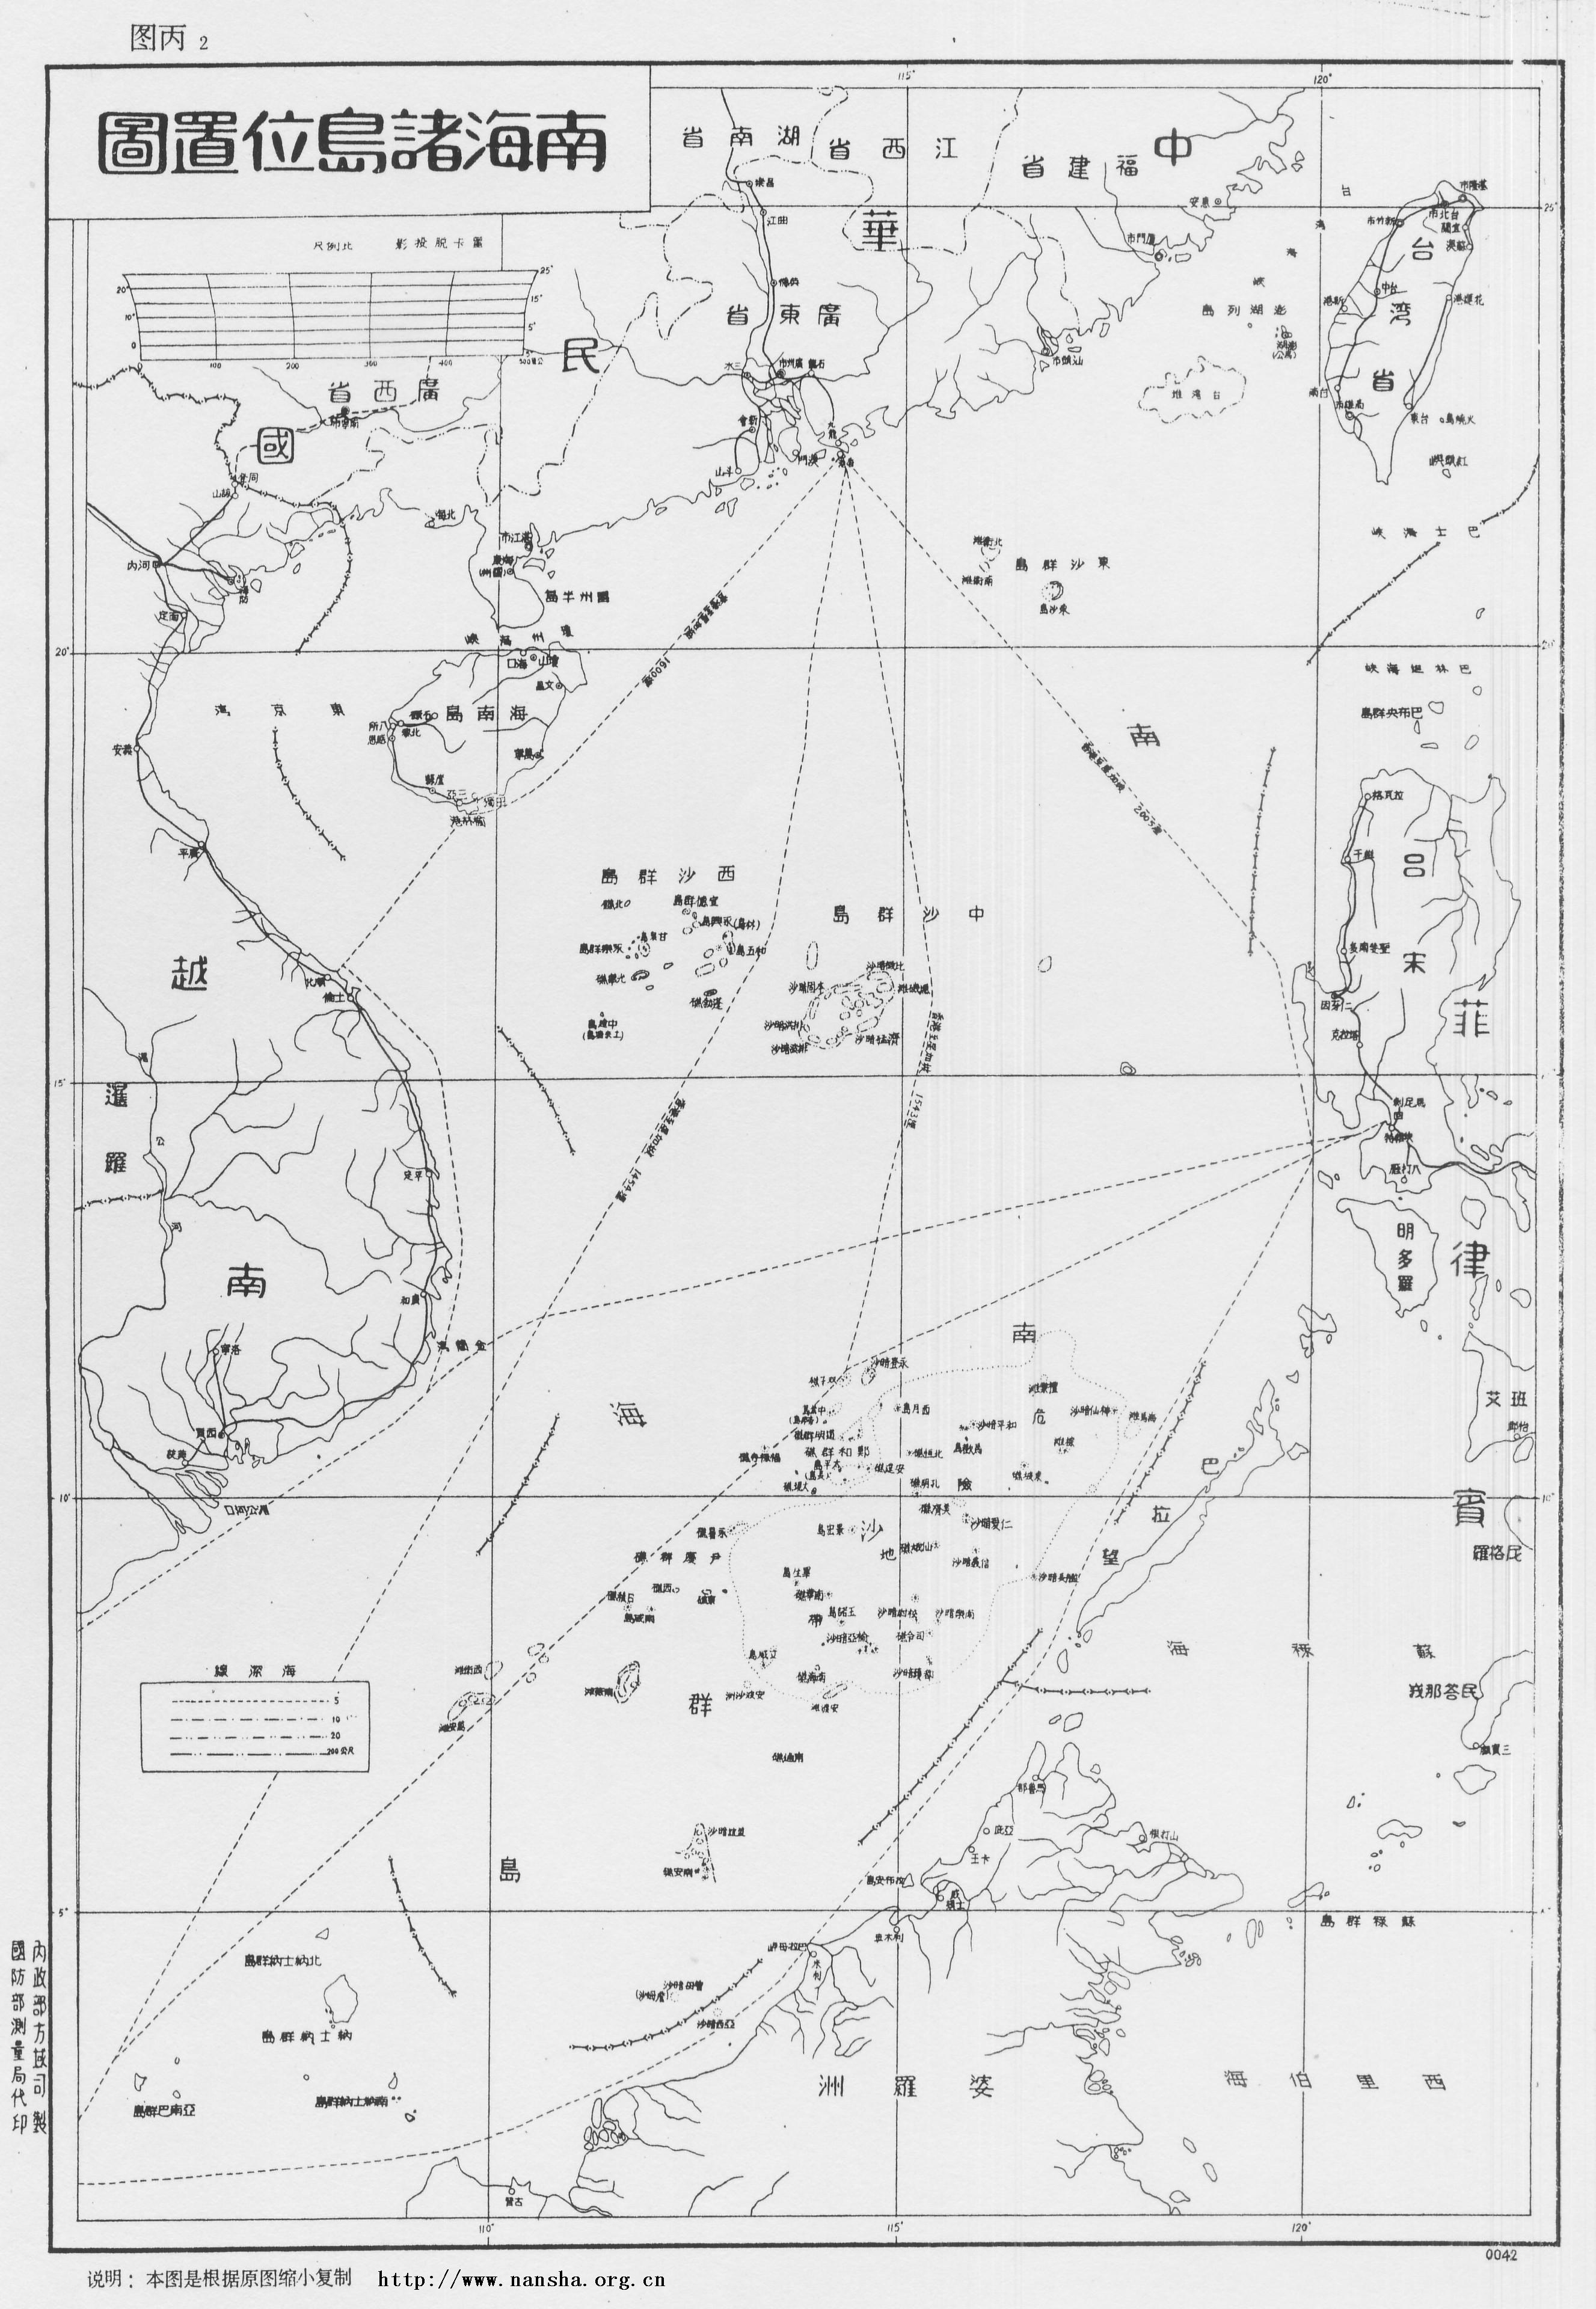 1947 South China Sea Islands Map